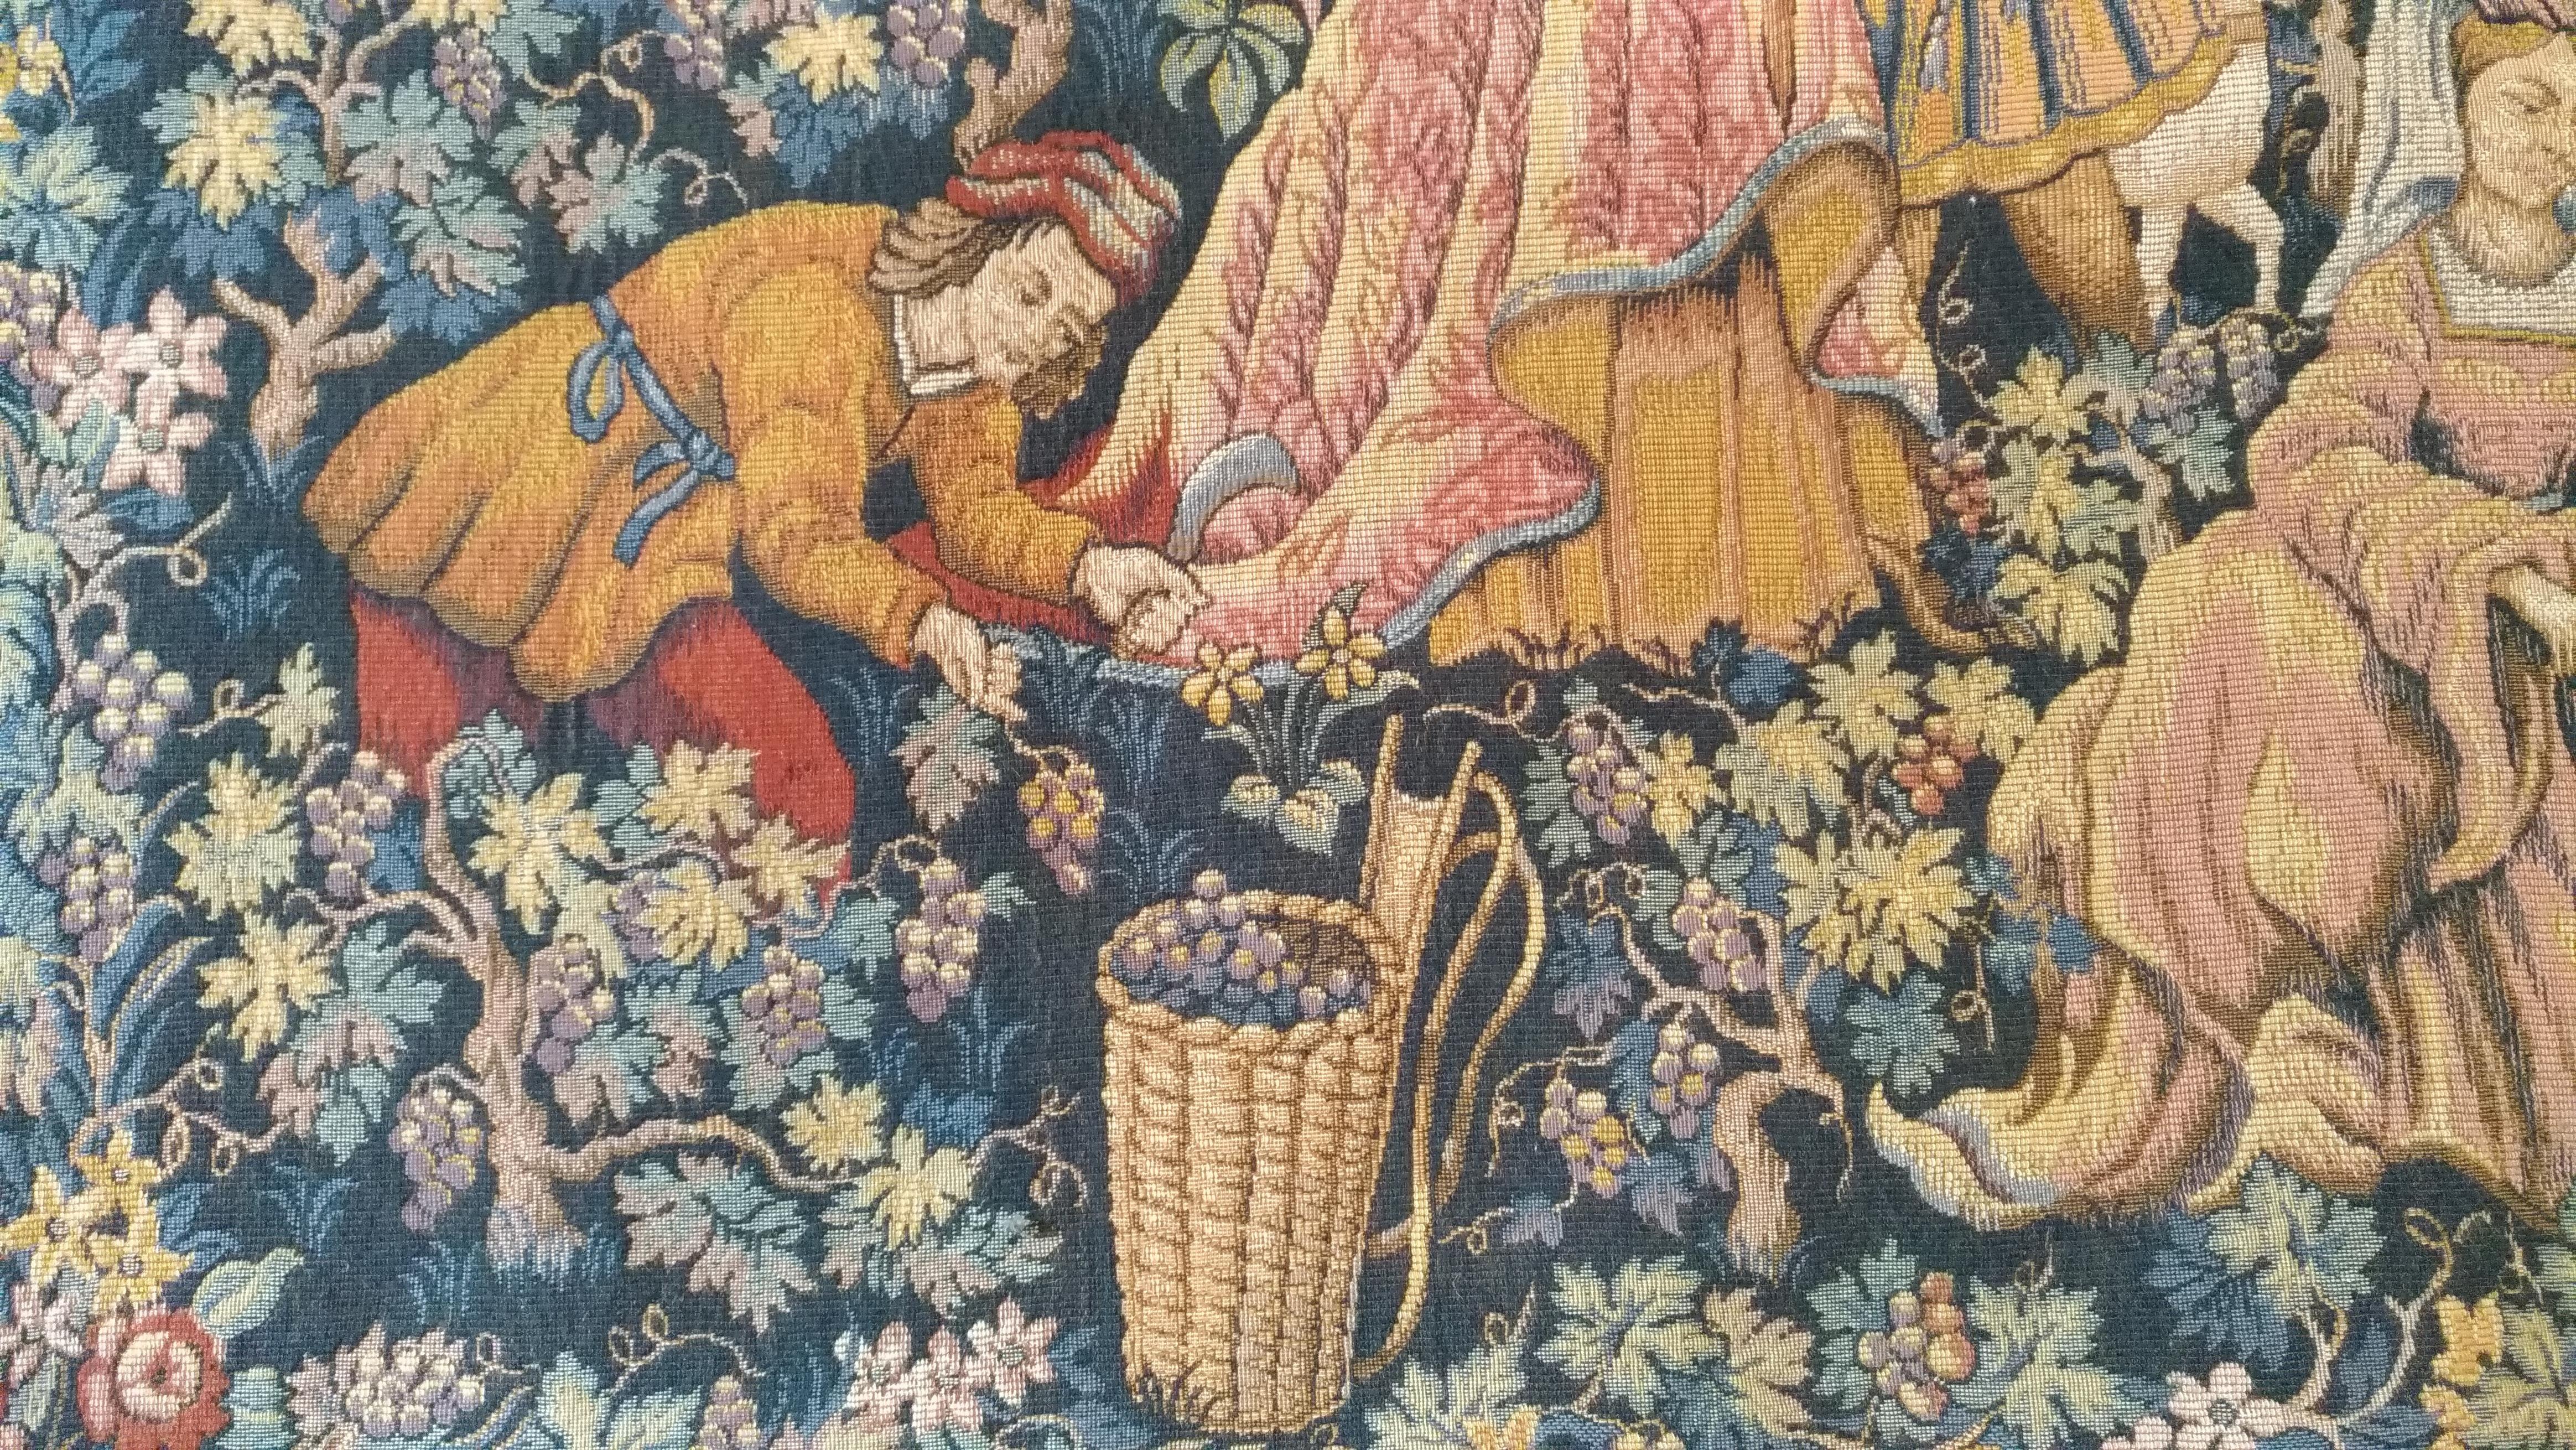 994 - Magnificent Jaquar Tapestry Vintage Aubusson Style Medieval Design 1